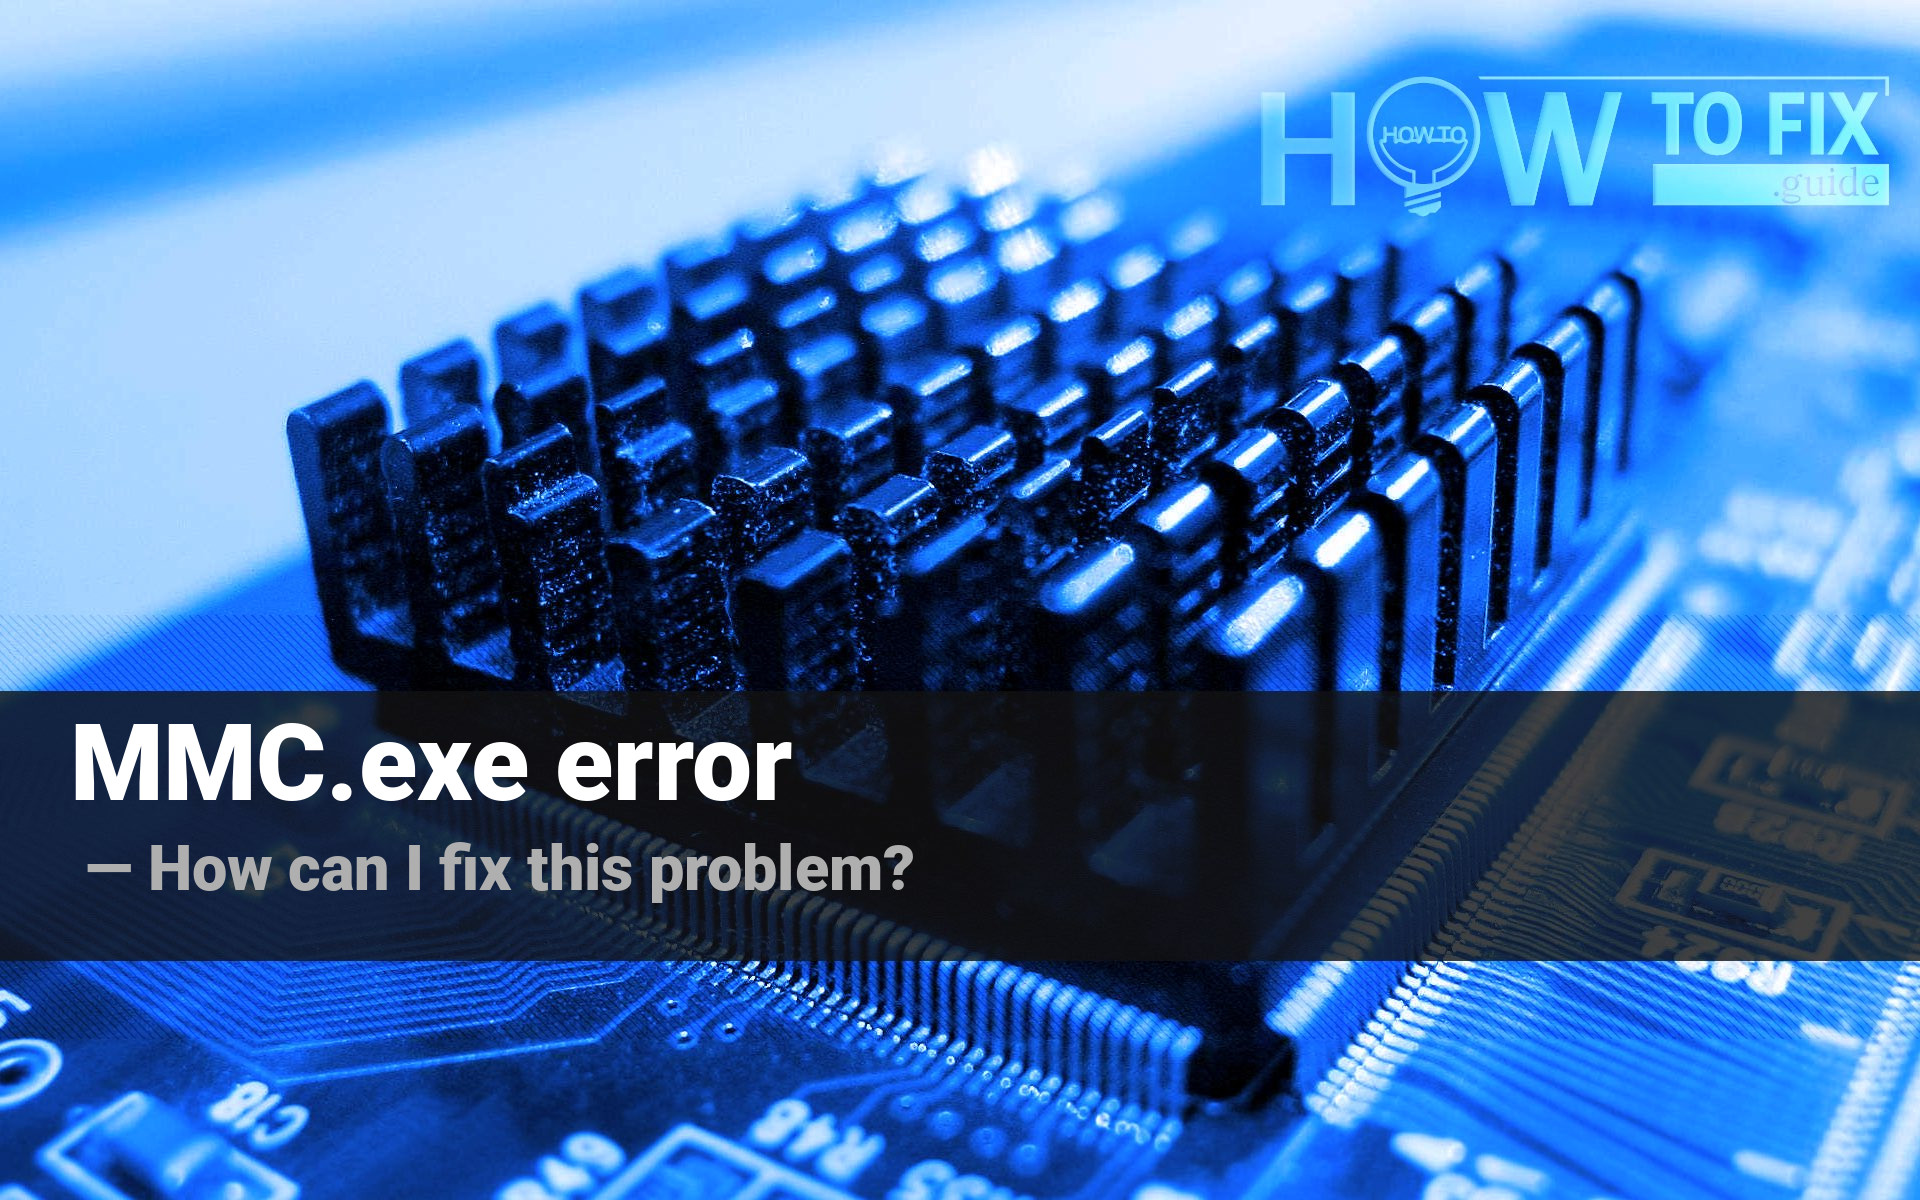 MMC.exe error. How to fix that problem?